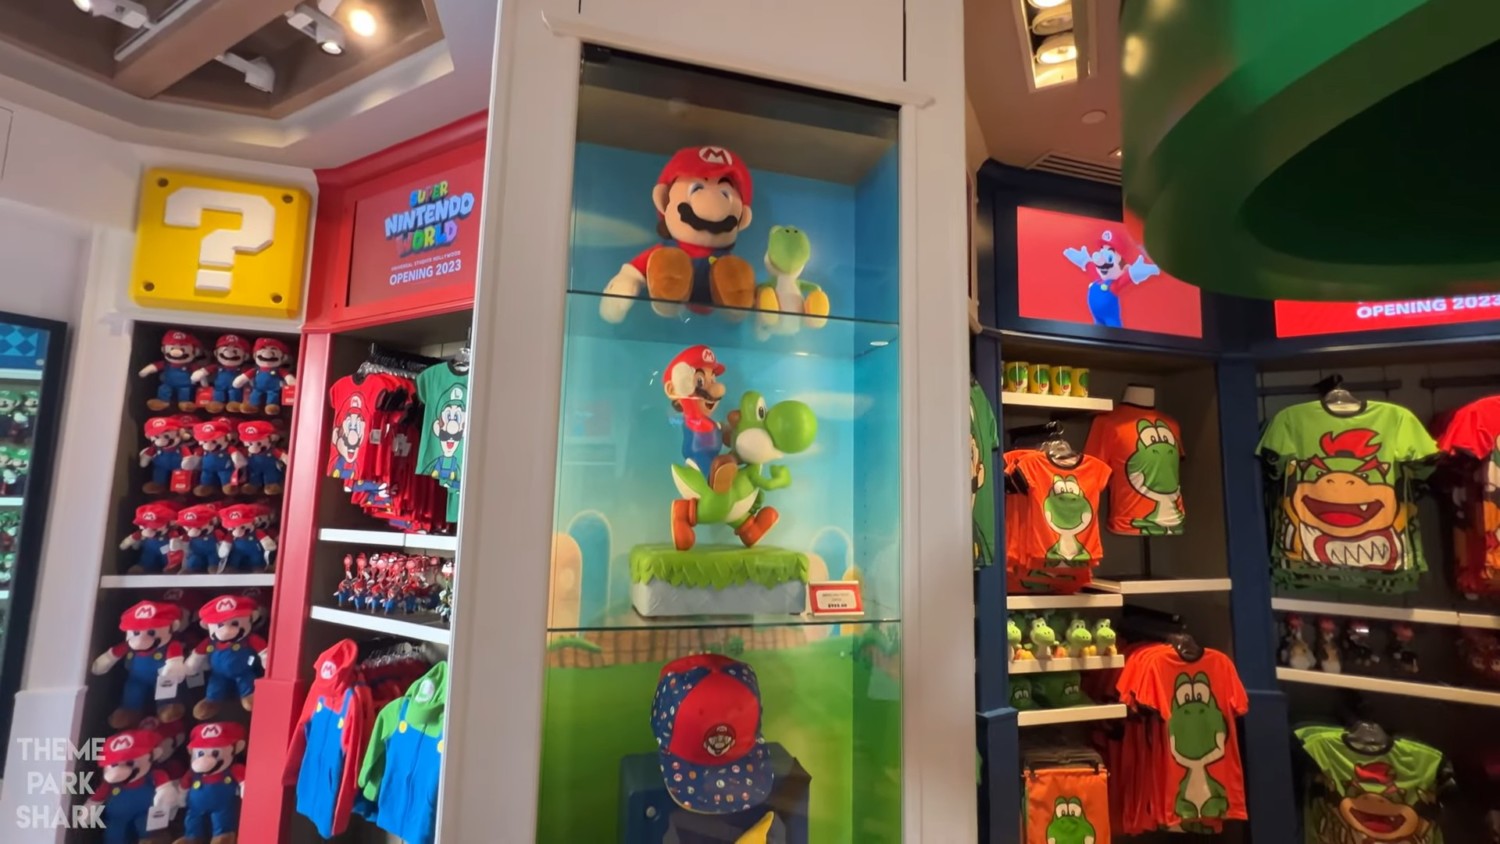 Super Nintendo World Store Opens at Universal CityWalk Hollywood